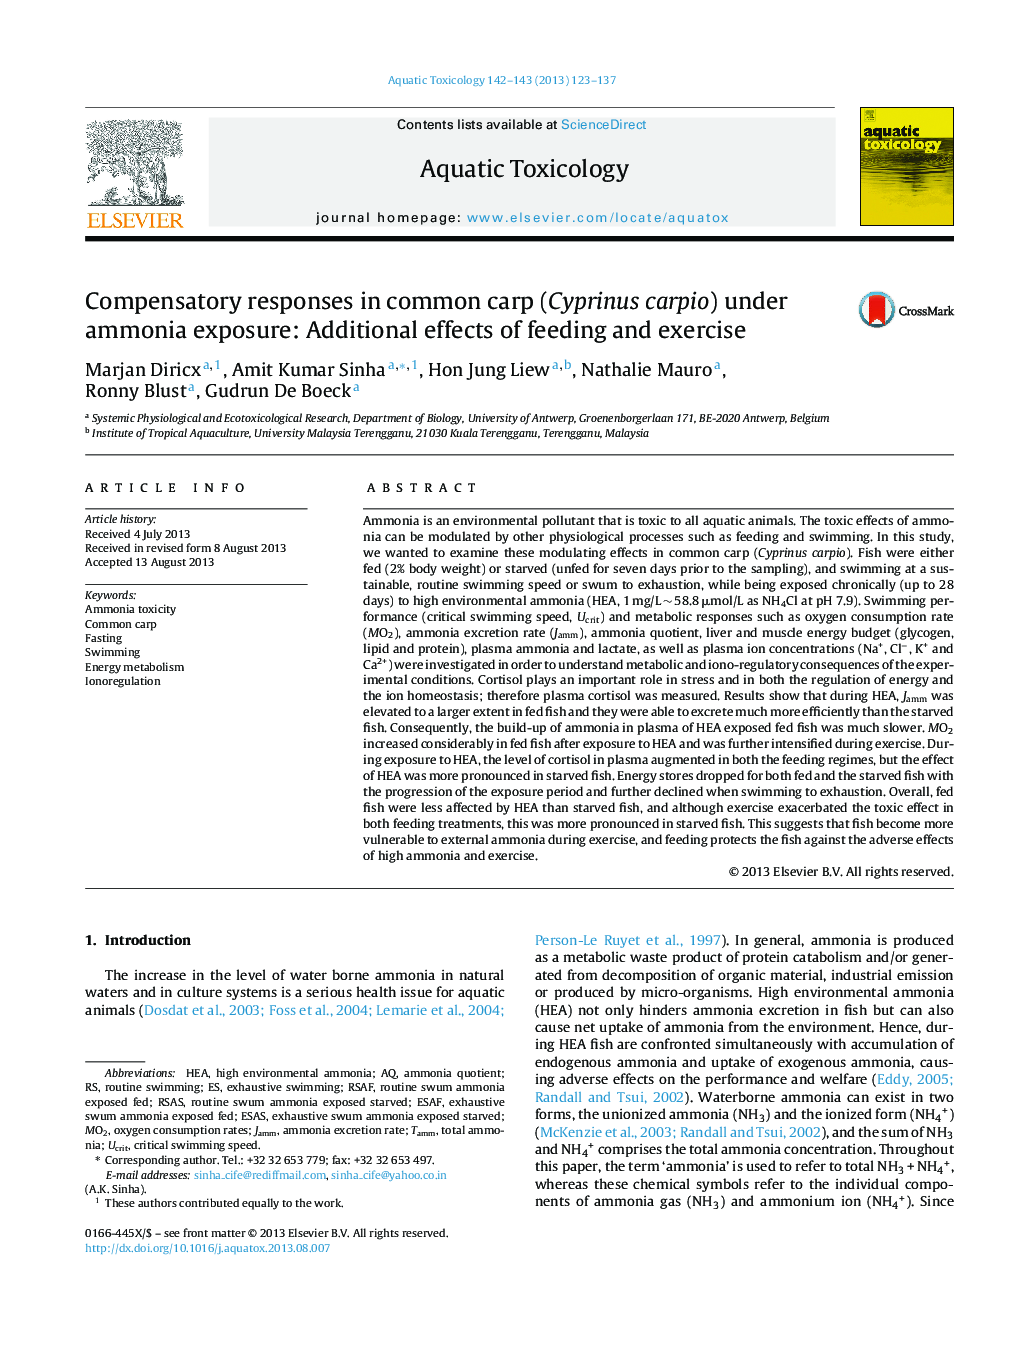 Compensatory responses in common carp (Cyprinus carpio) under ammonia exposure: Additional effects of feeding and exercise